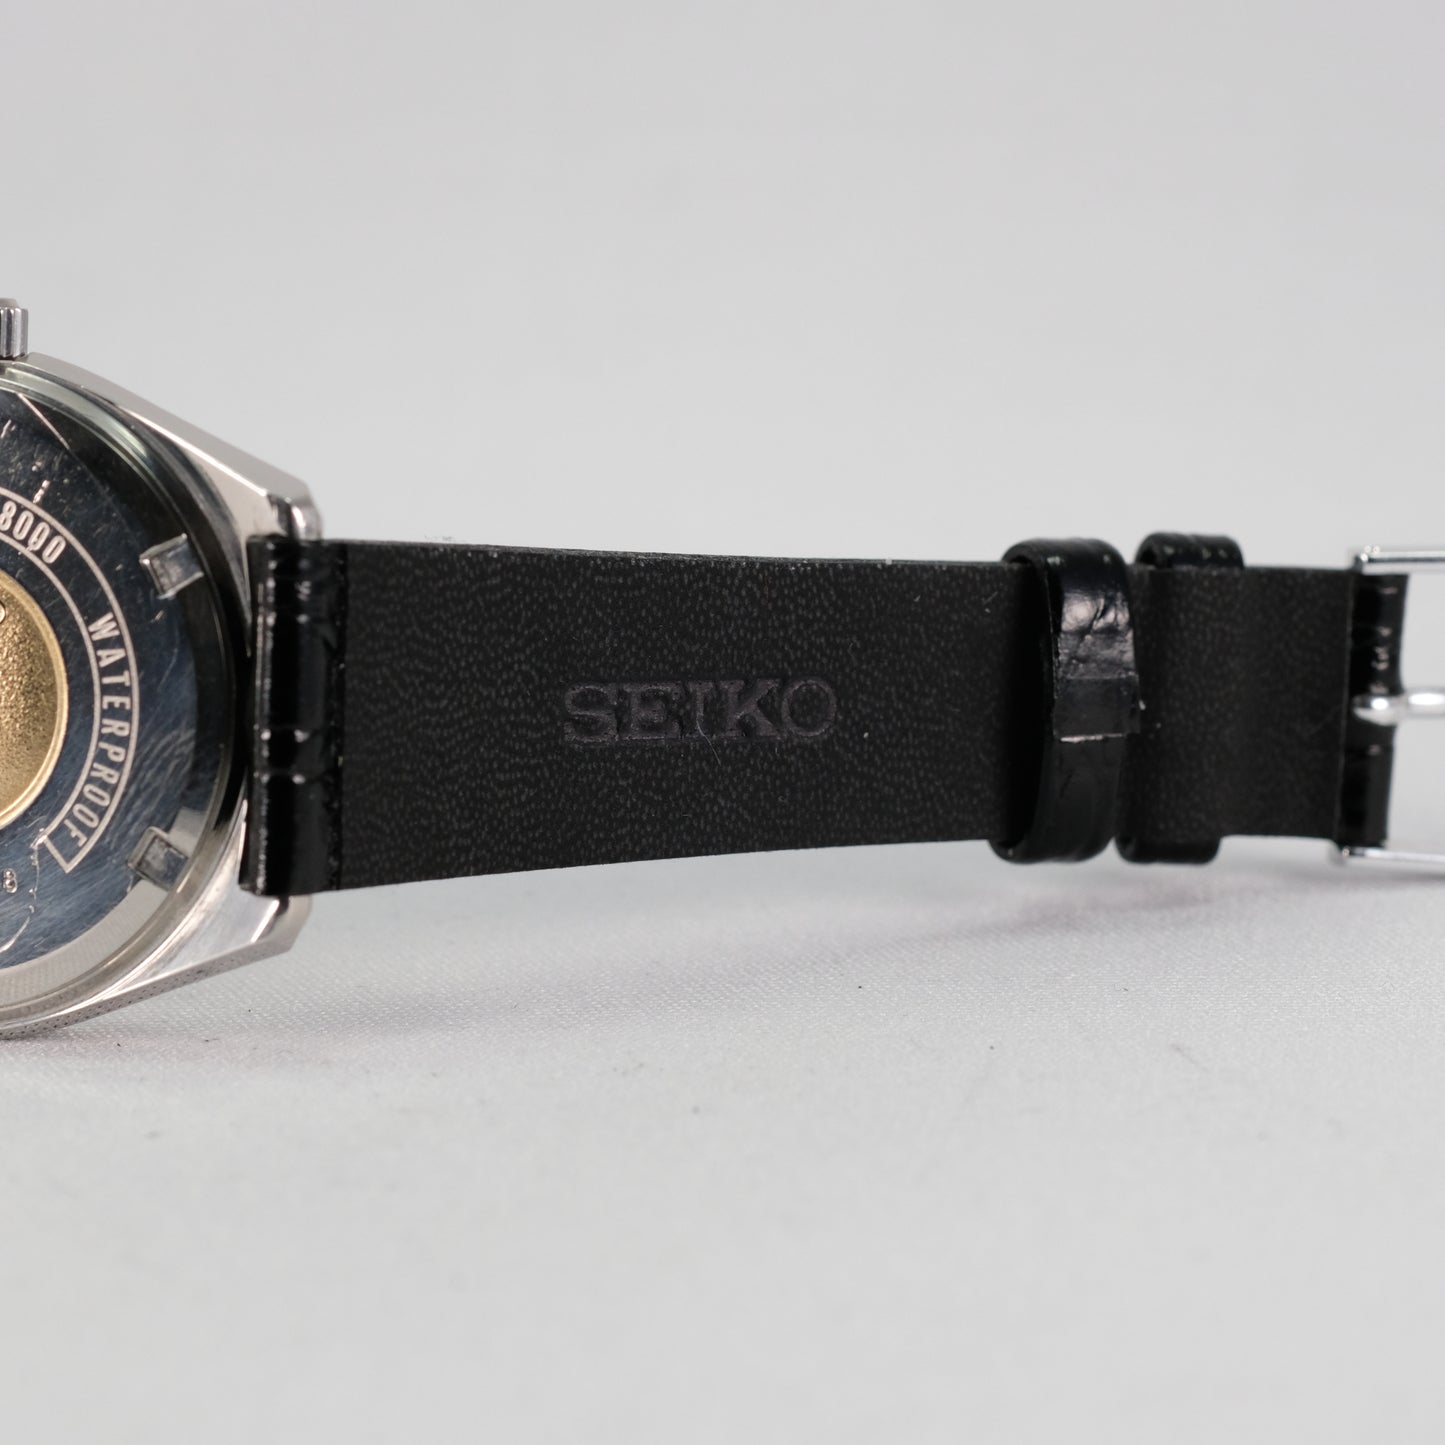 1969 Seiko GS 4520-8000